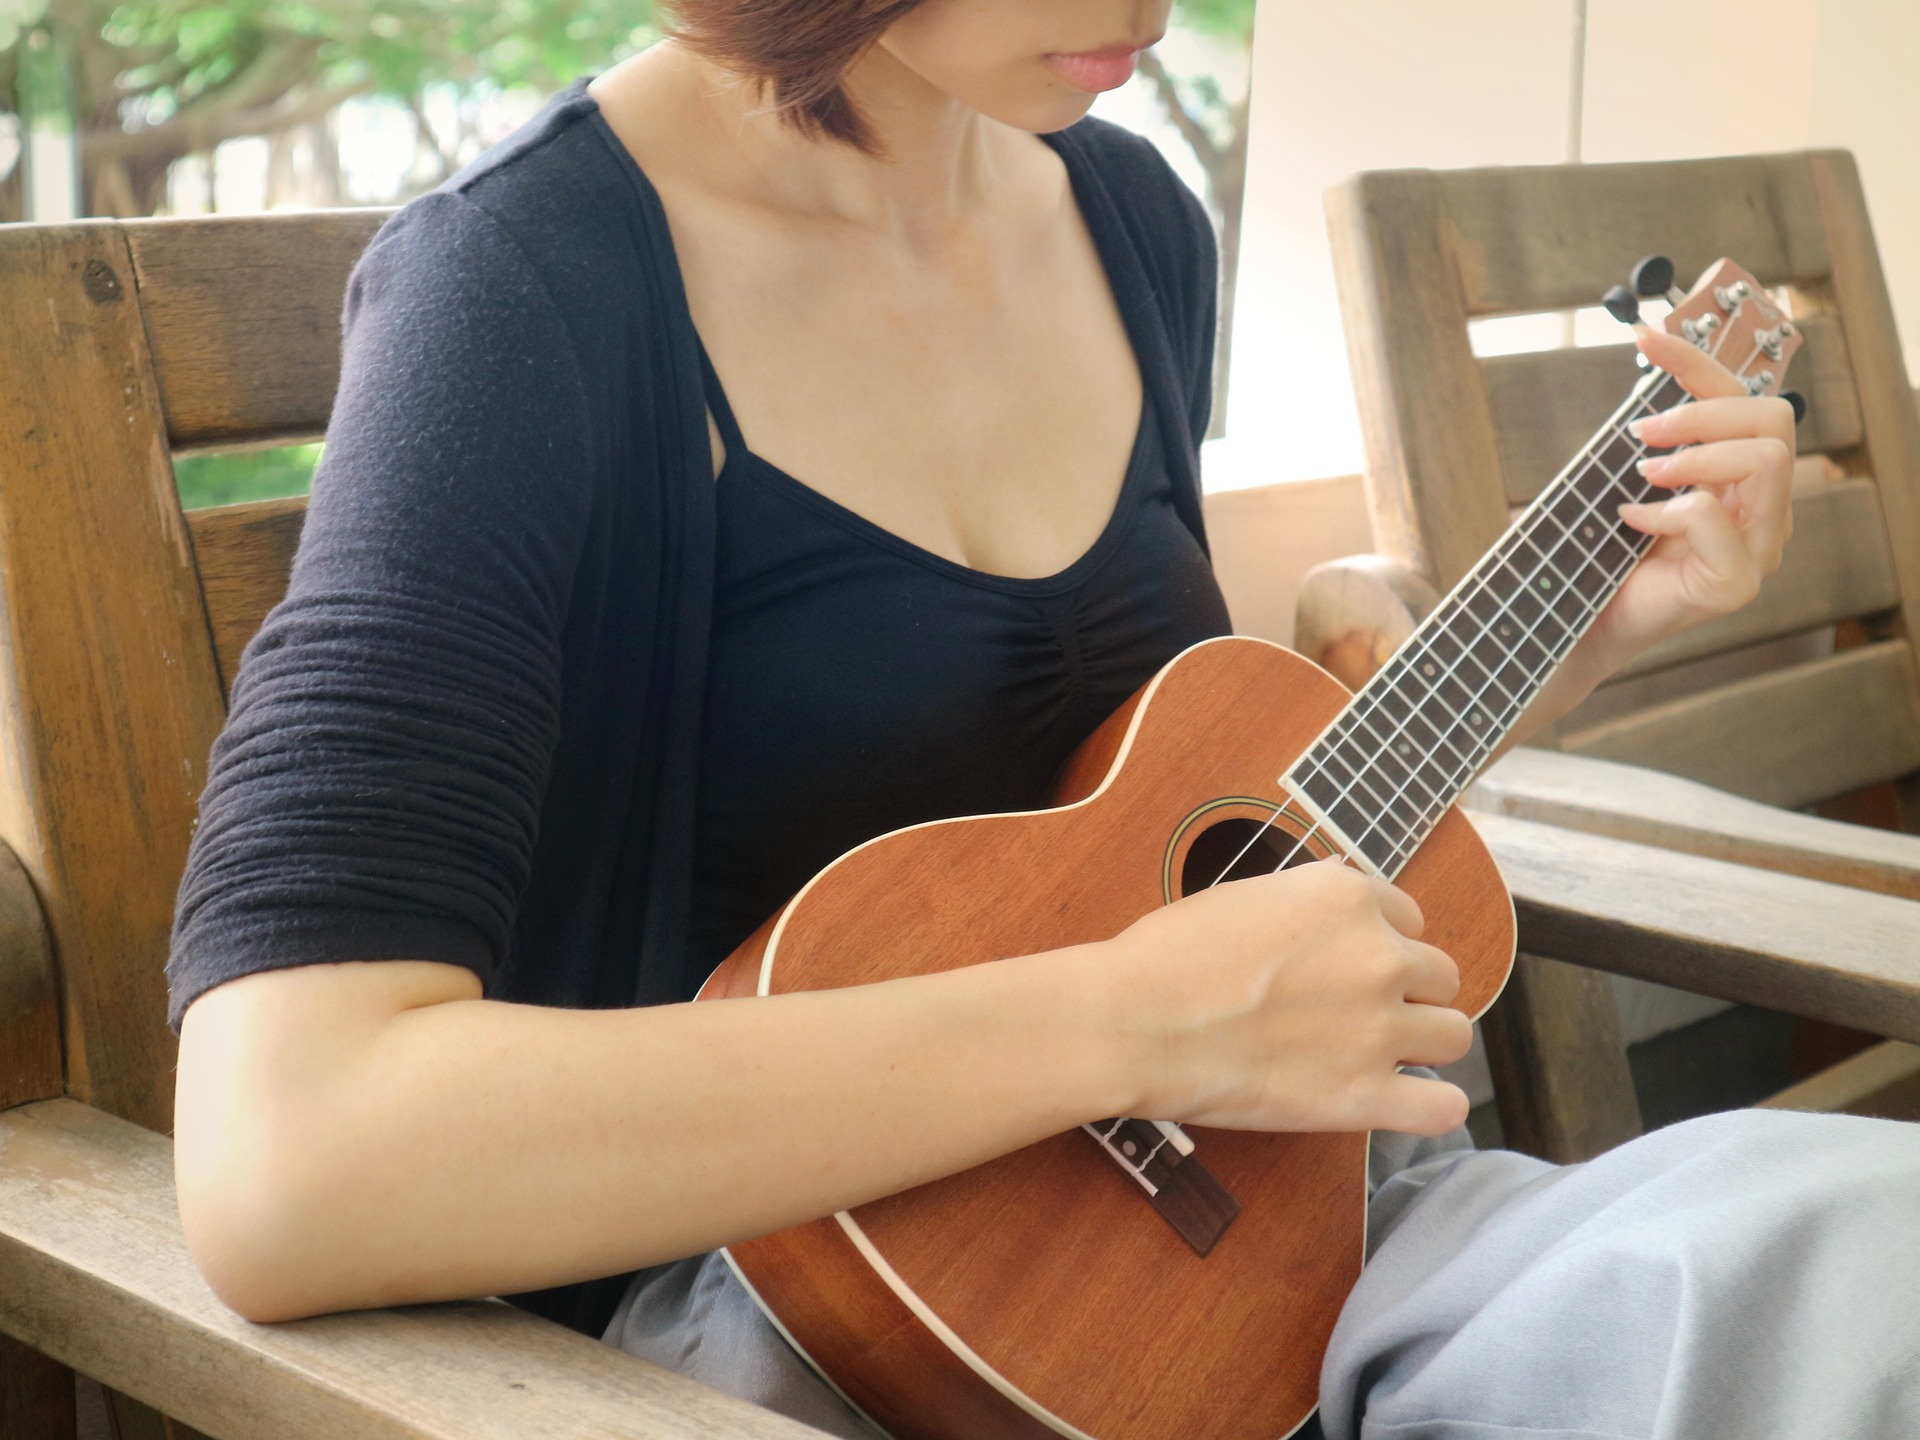 a young woman playing a ukulele